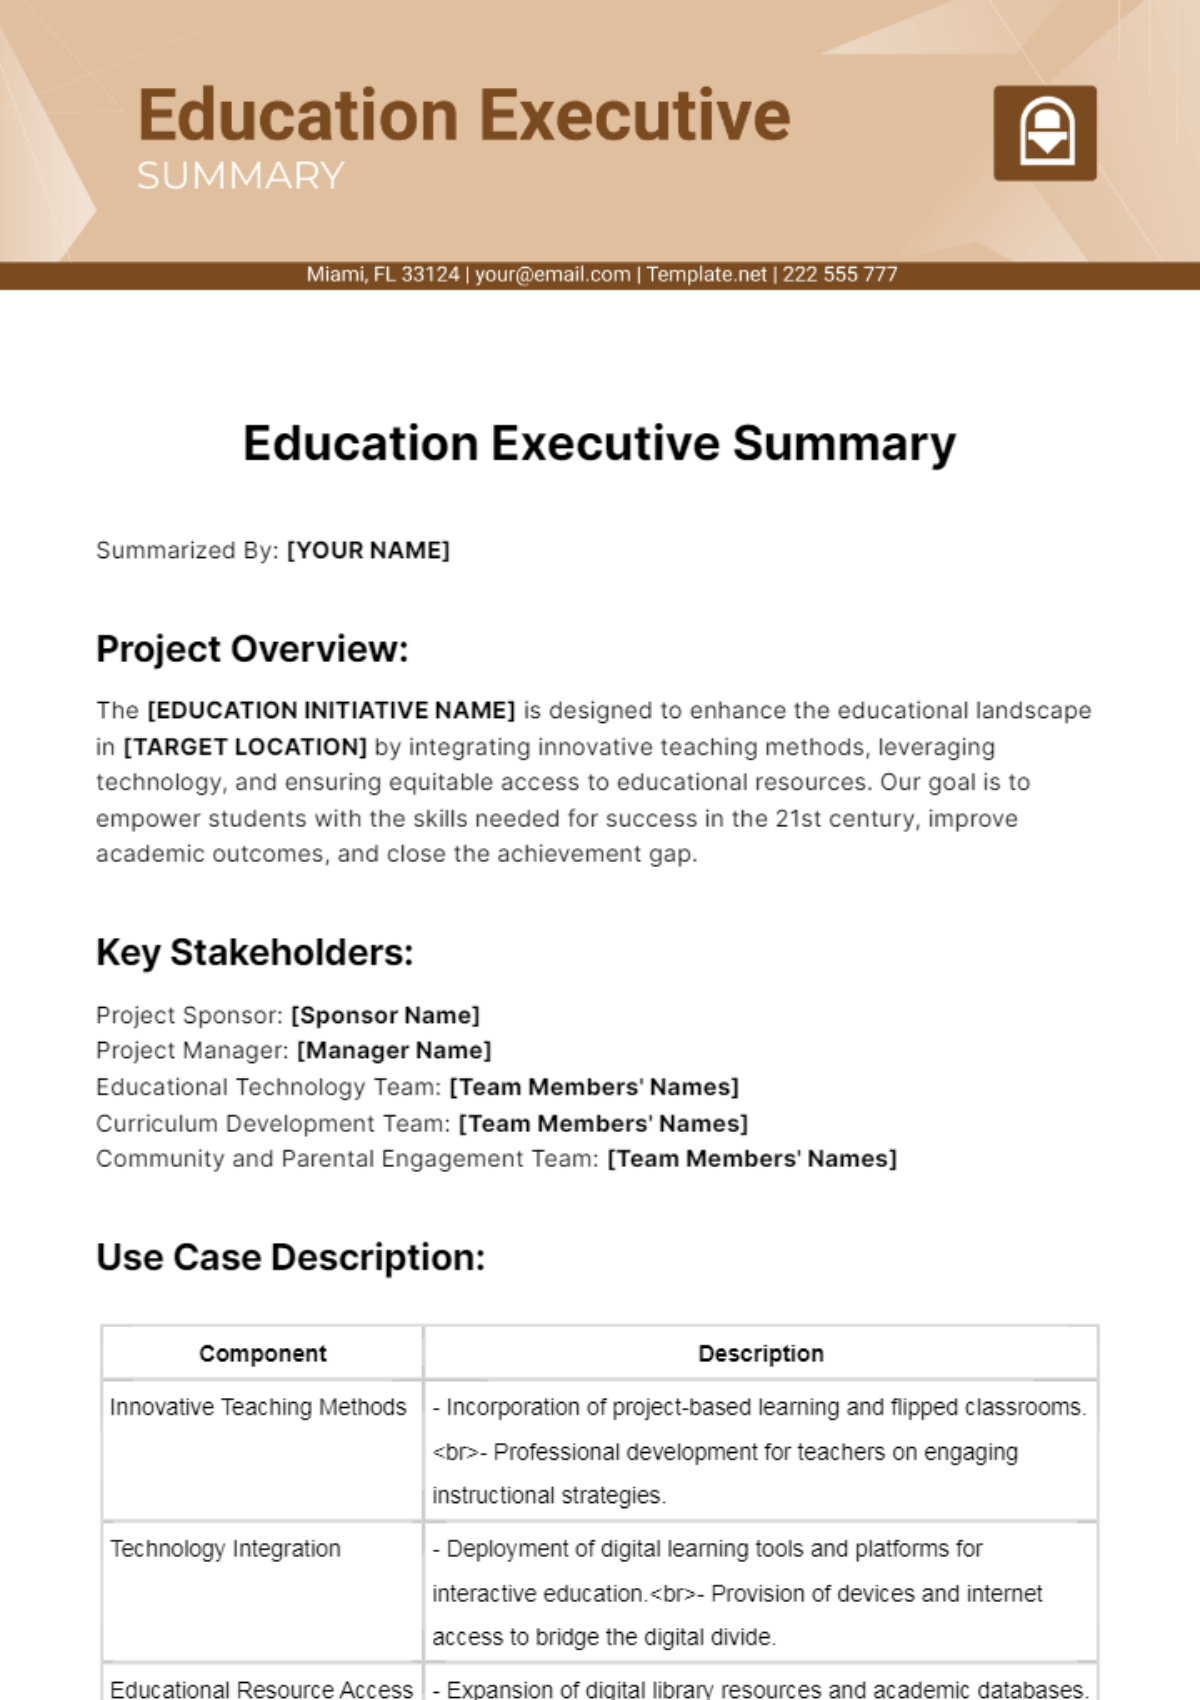 Education Executive Summary Template